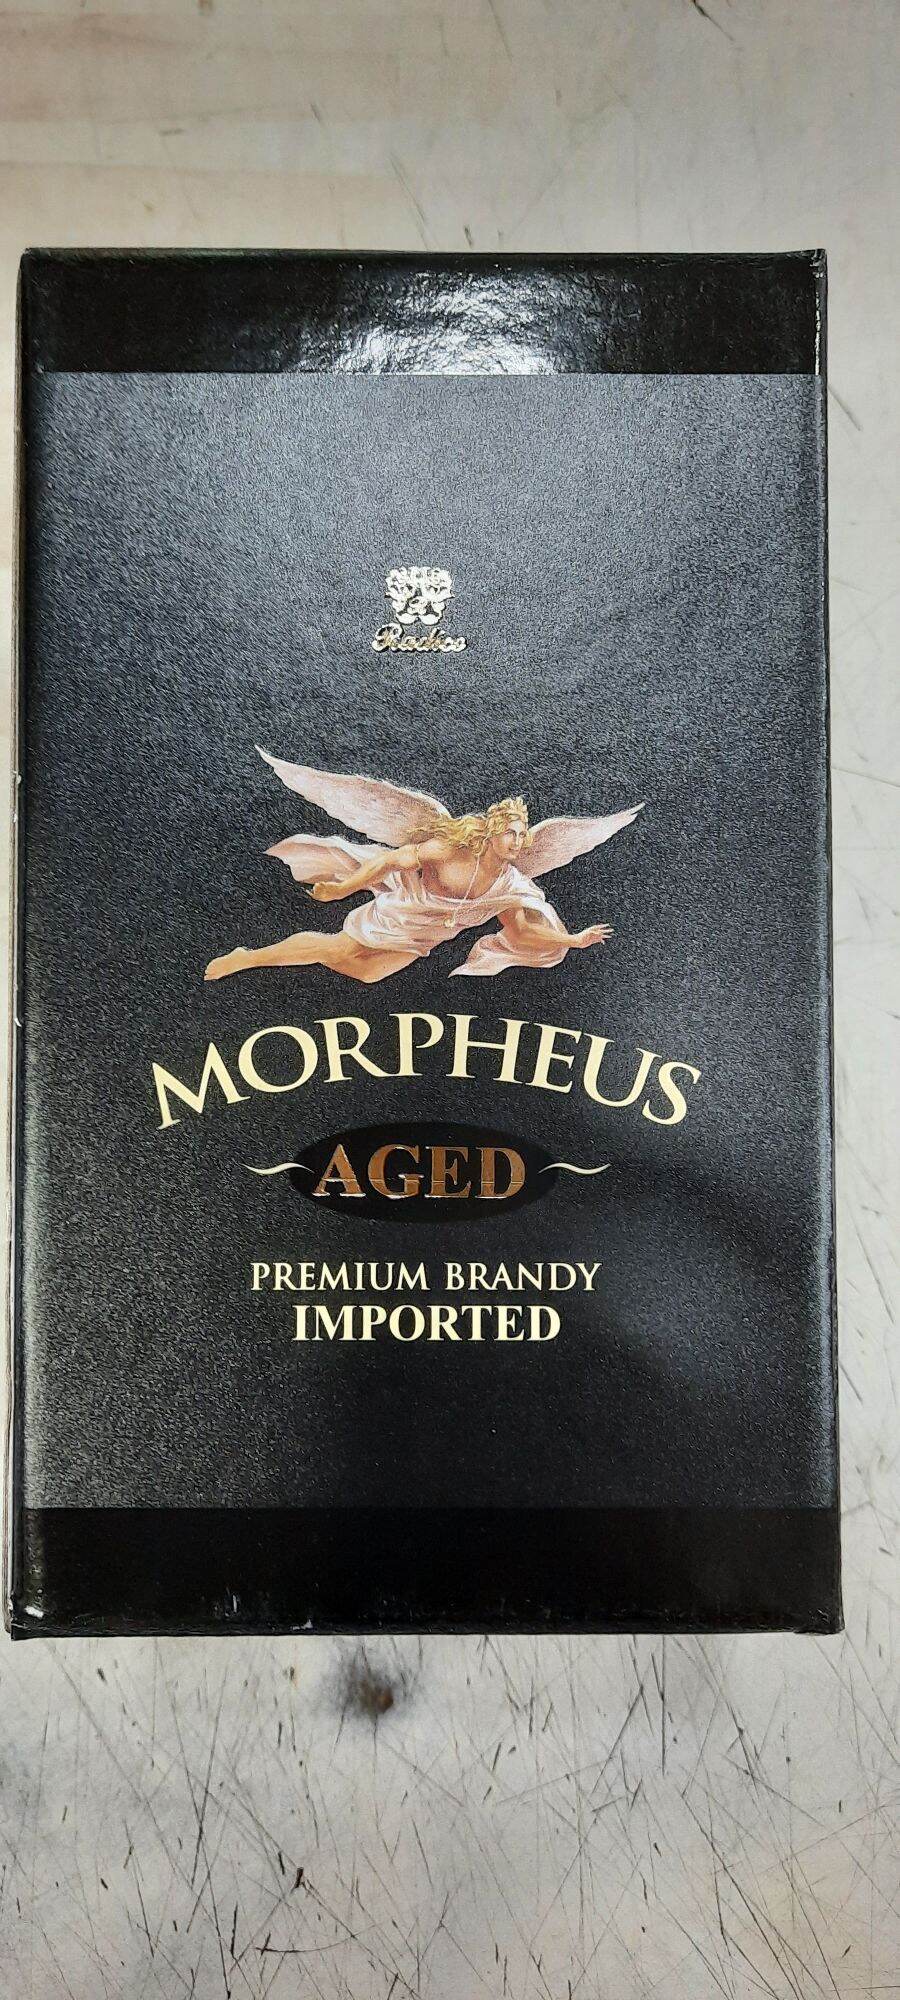 Aggregate more than 58 morpheus brandy logo latest - ceg.edu.vn